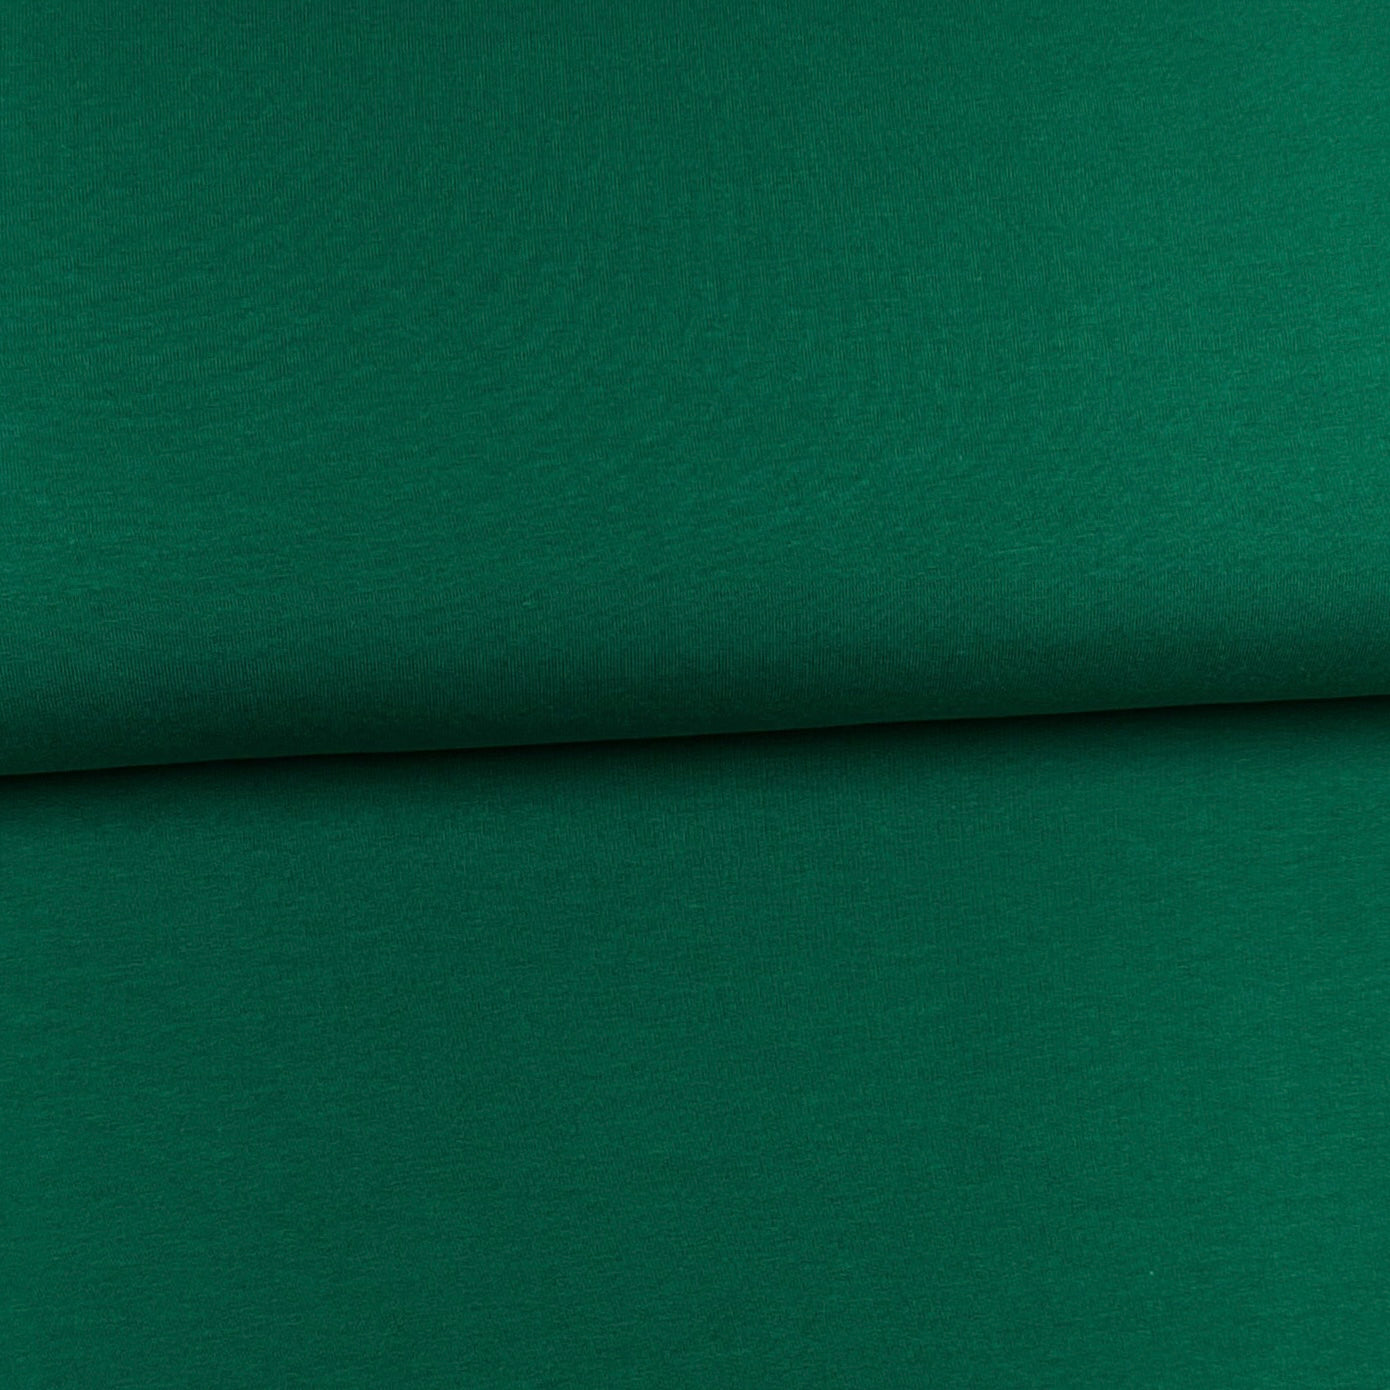 Emerald - organic plain jersey